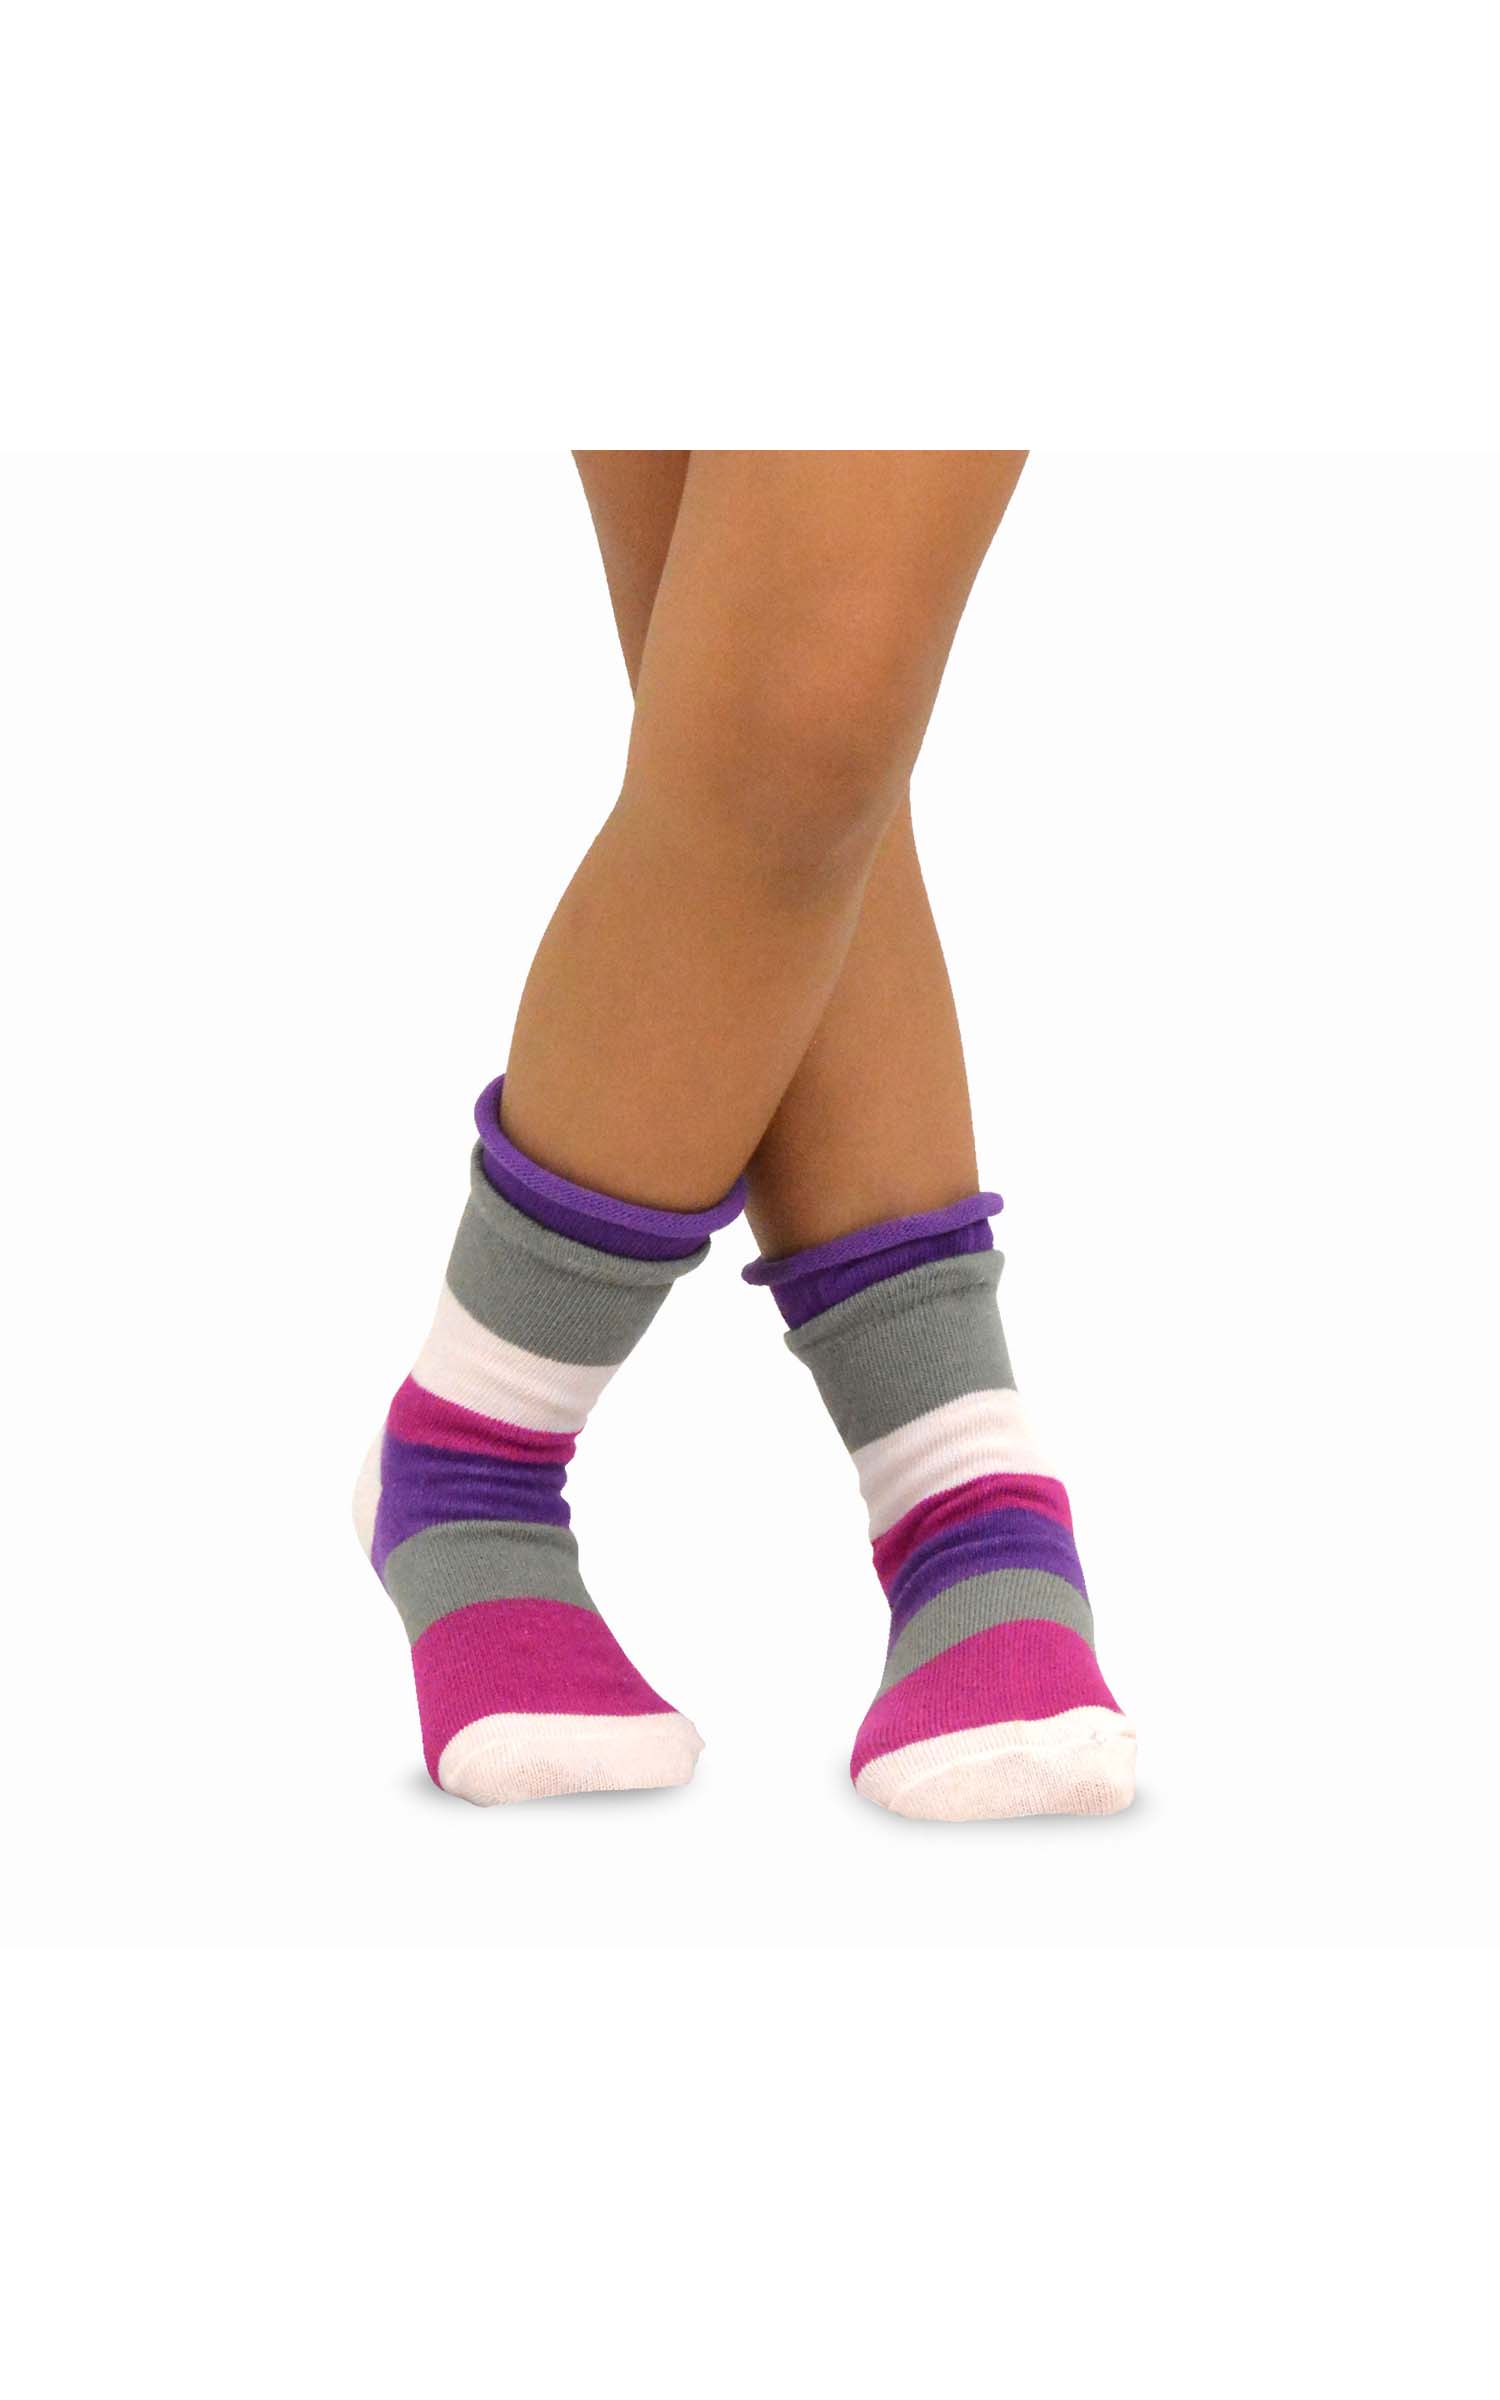 TeeHee Little Kids Girls Cotton Crew Basic Roll Top Socks 6 Pair Pack (9-10 Years, Indian Stripe) - image 2 of 7